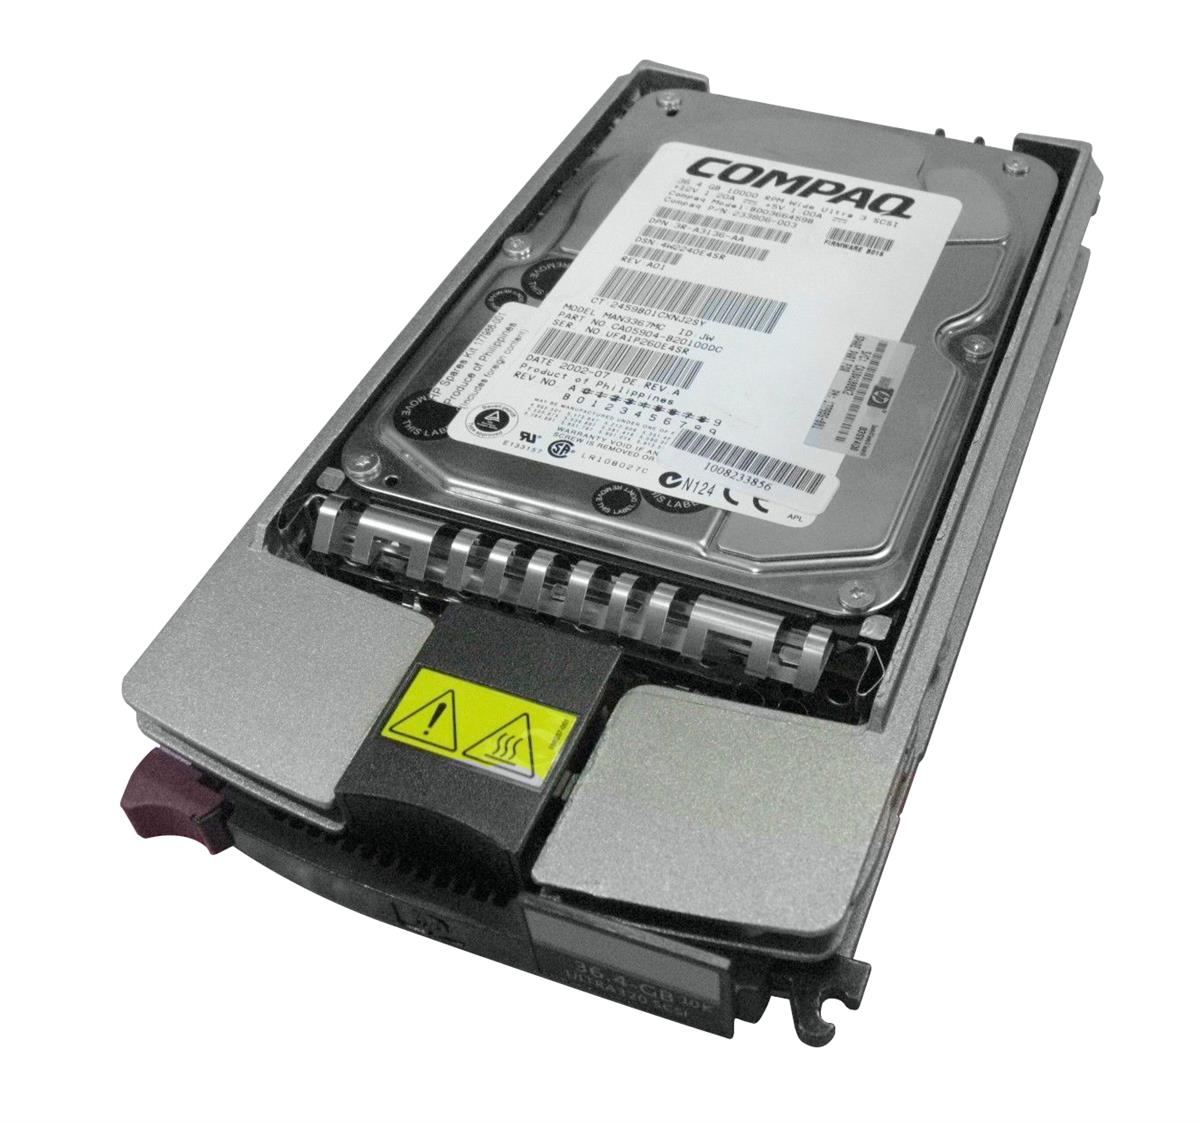 233806-003 HP 36.4GB 10000RPM Ultra-160 SCSI 80-Pin LVD Hot Swap 3.5-inch Internal Hard Drive